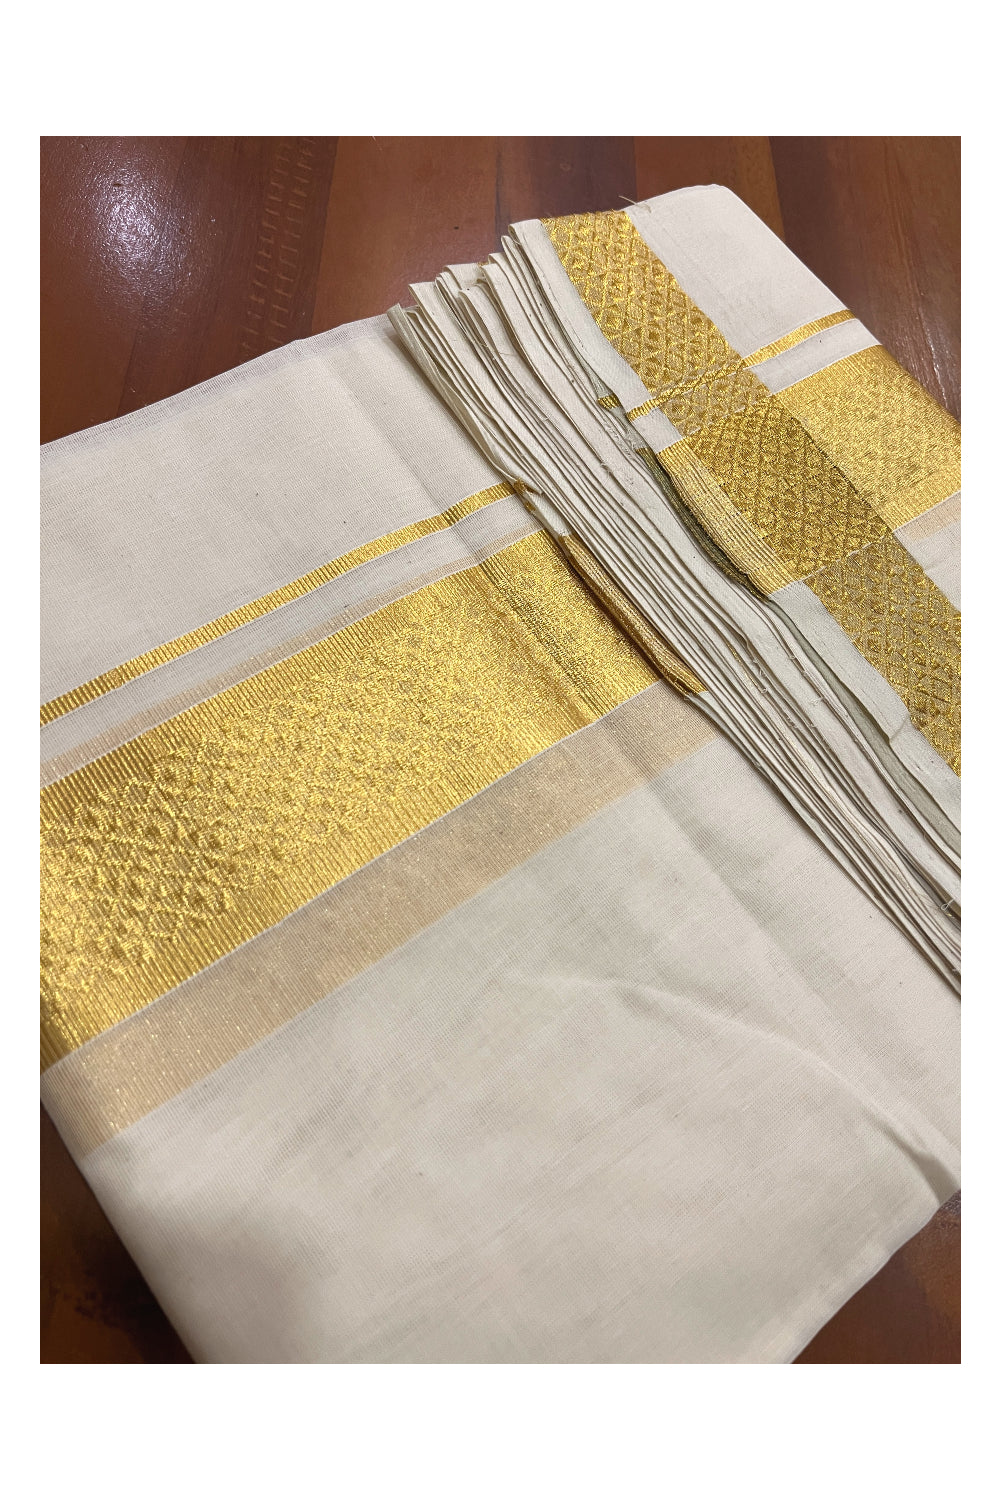 Southloom Premium Handloom Pure Cotton Wedding Mundu with Kasavu Woven Border (South Indian Kerala Dhoti)